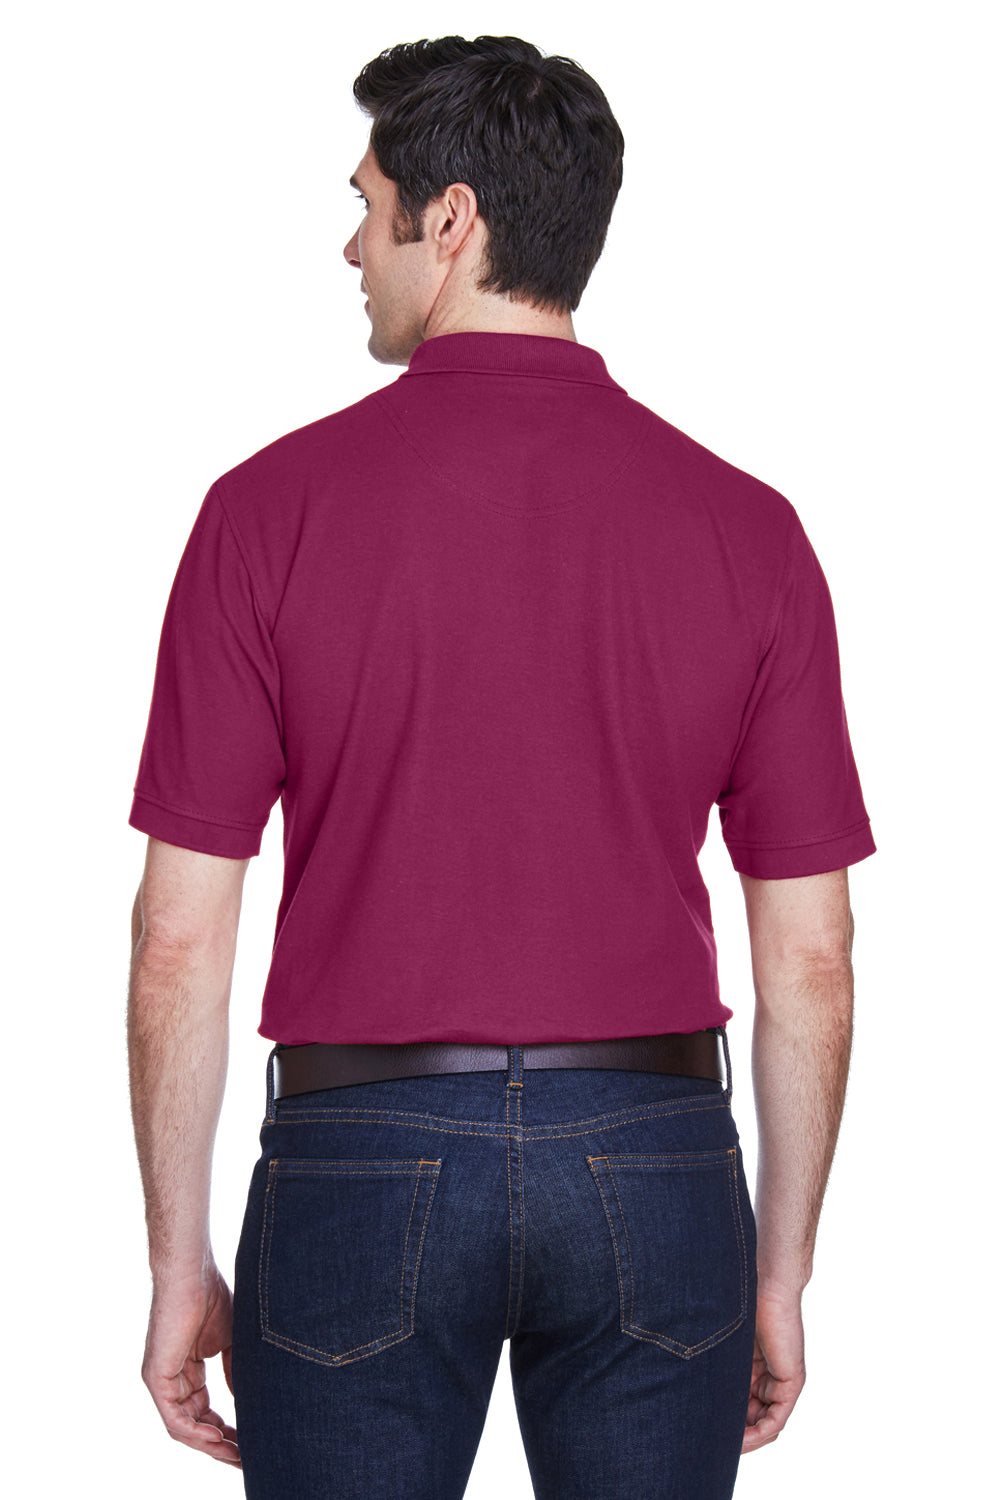 UltraClub 8540 Mens Whisper Short Sleeve Polo Shirt Wine Red Back